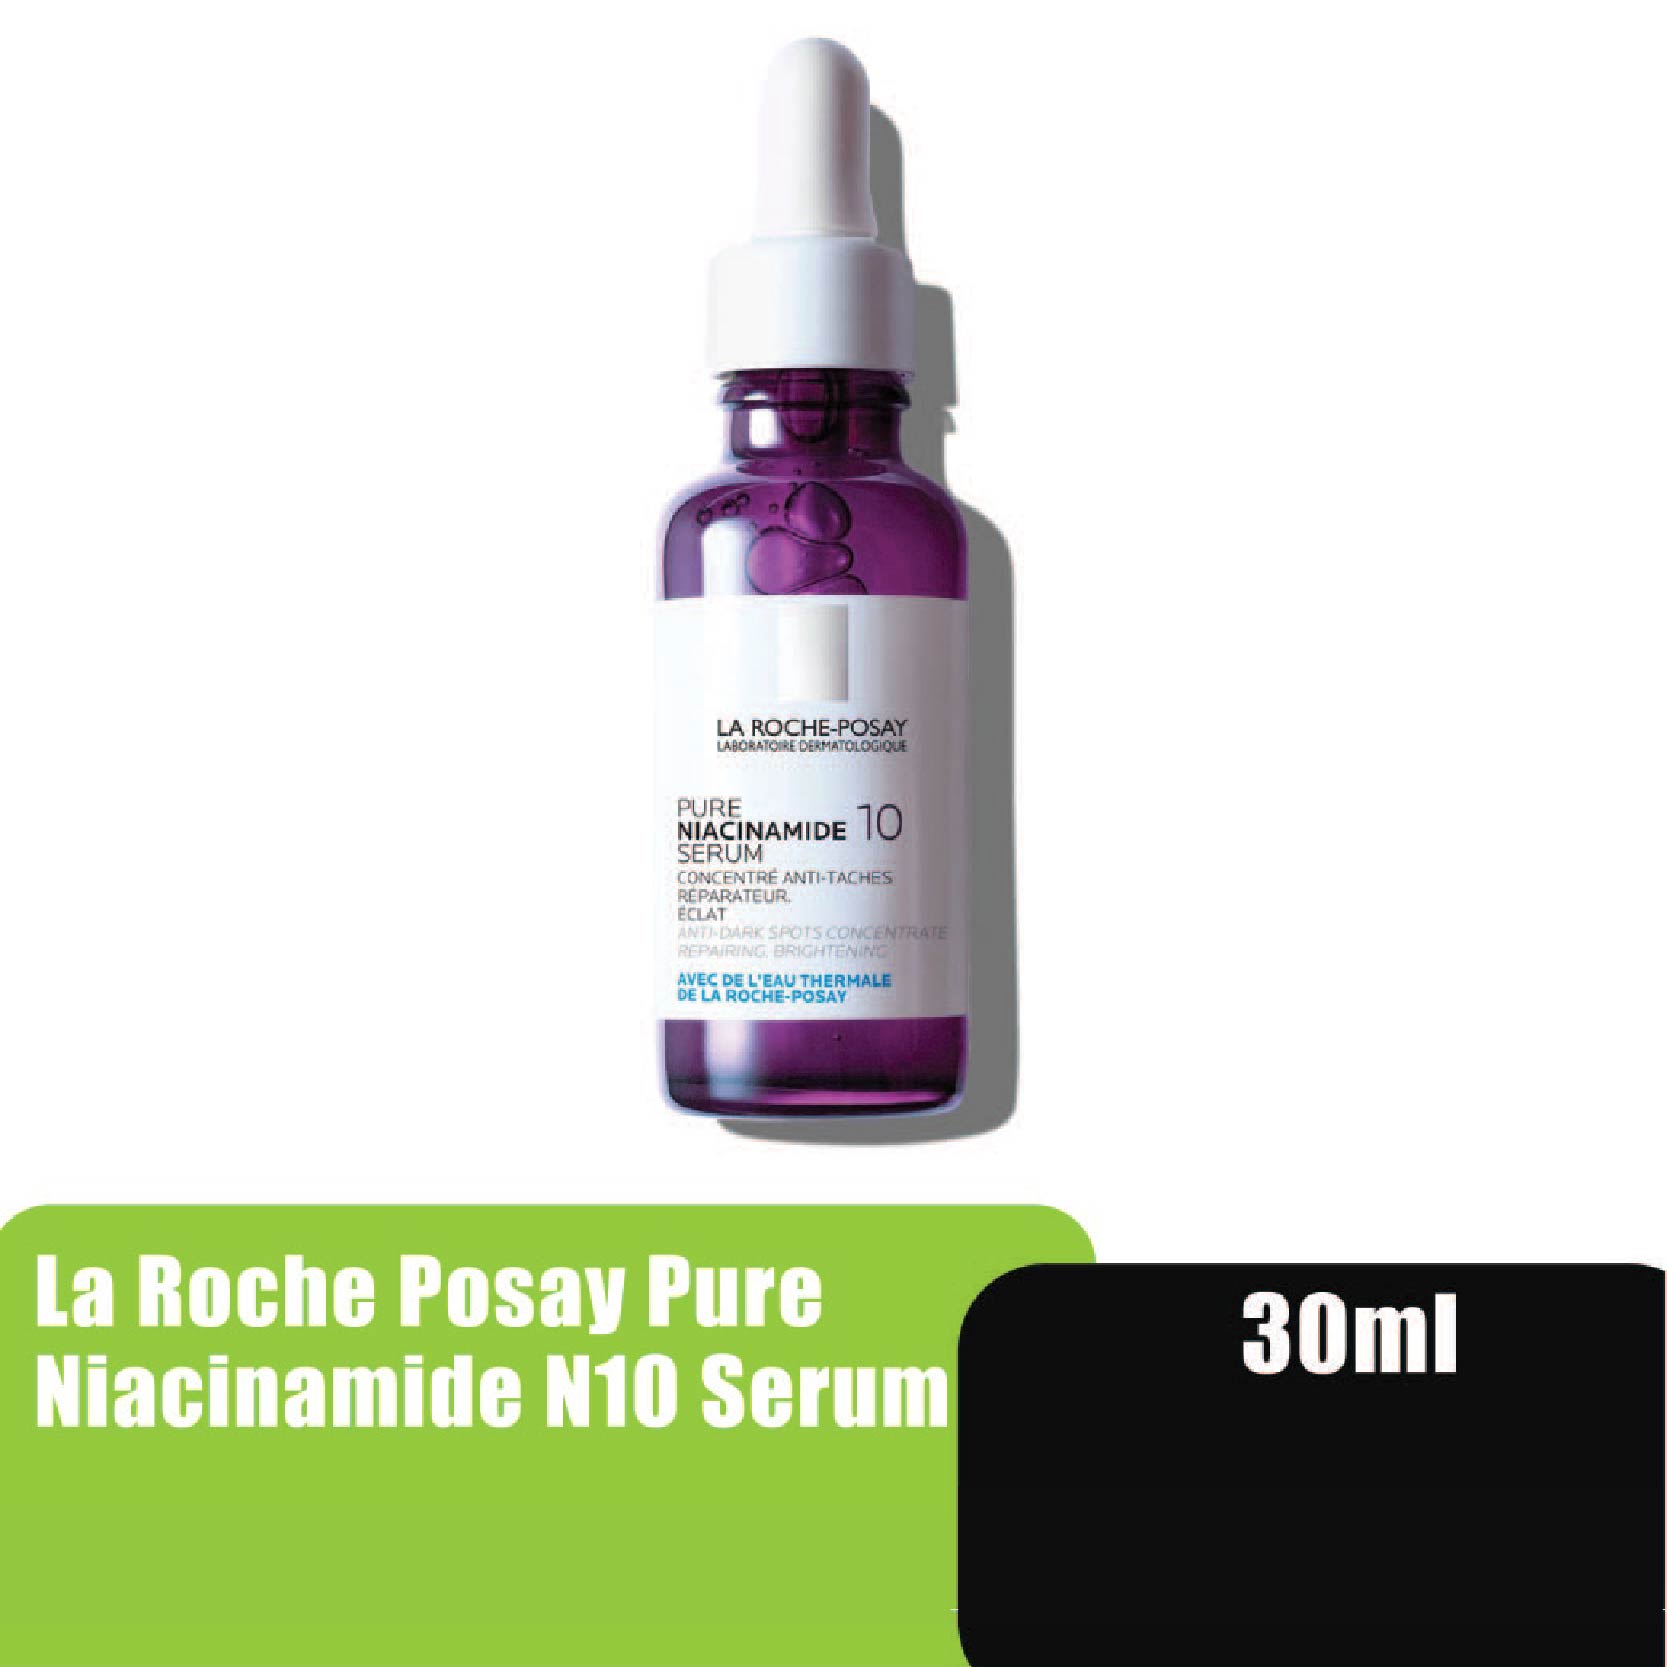 LA ROCHE POSAY Niacinamide Serum N10 30ml - Anti Dark Sport Face Serum / Serum Muka Dark Spot 精华液